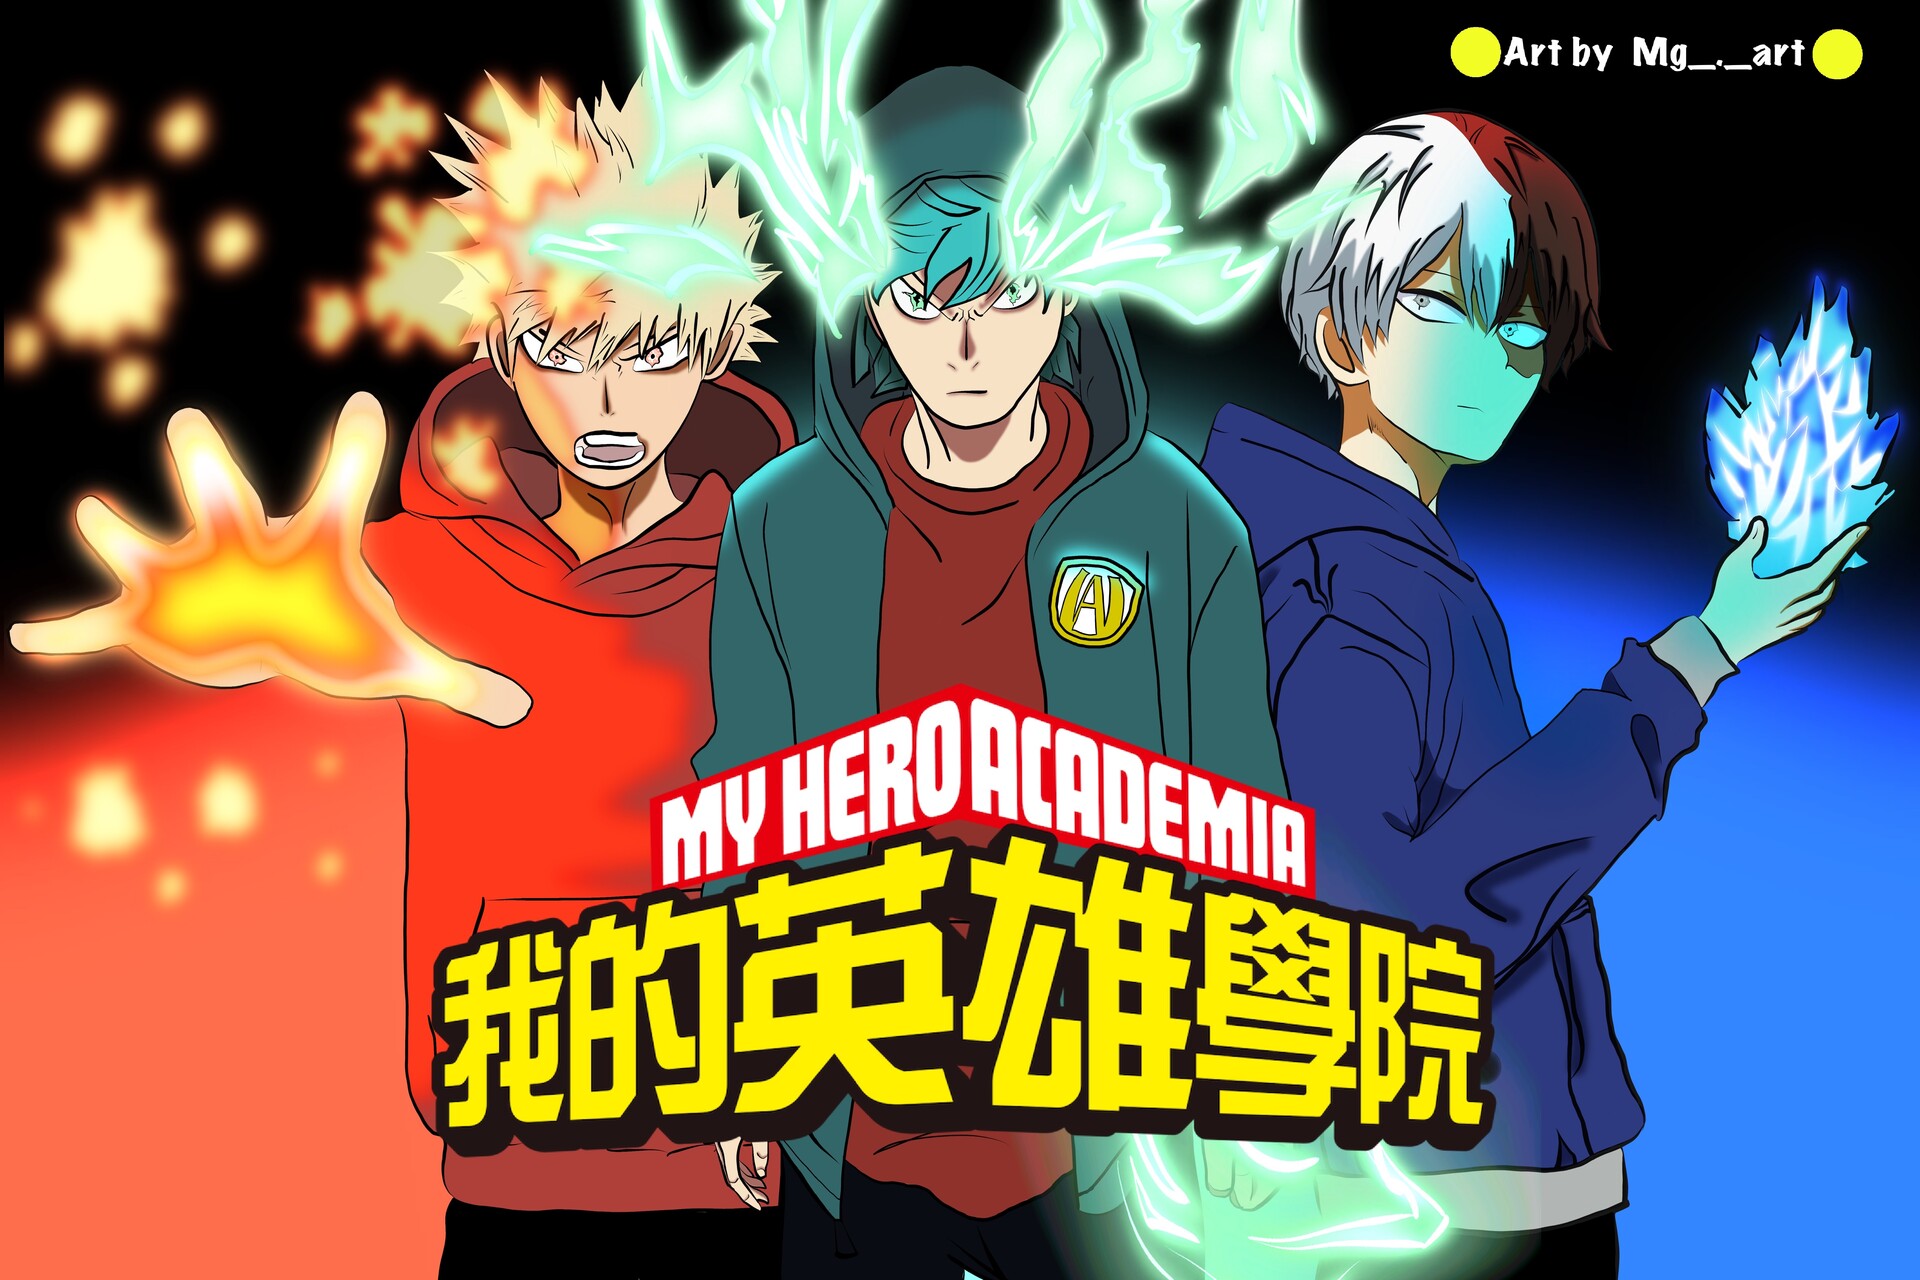 My Hero Academia Season 4 - The Big 3 - - My Hero Academia